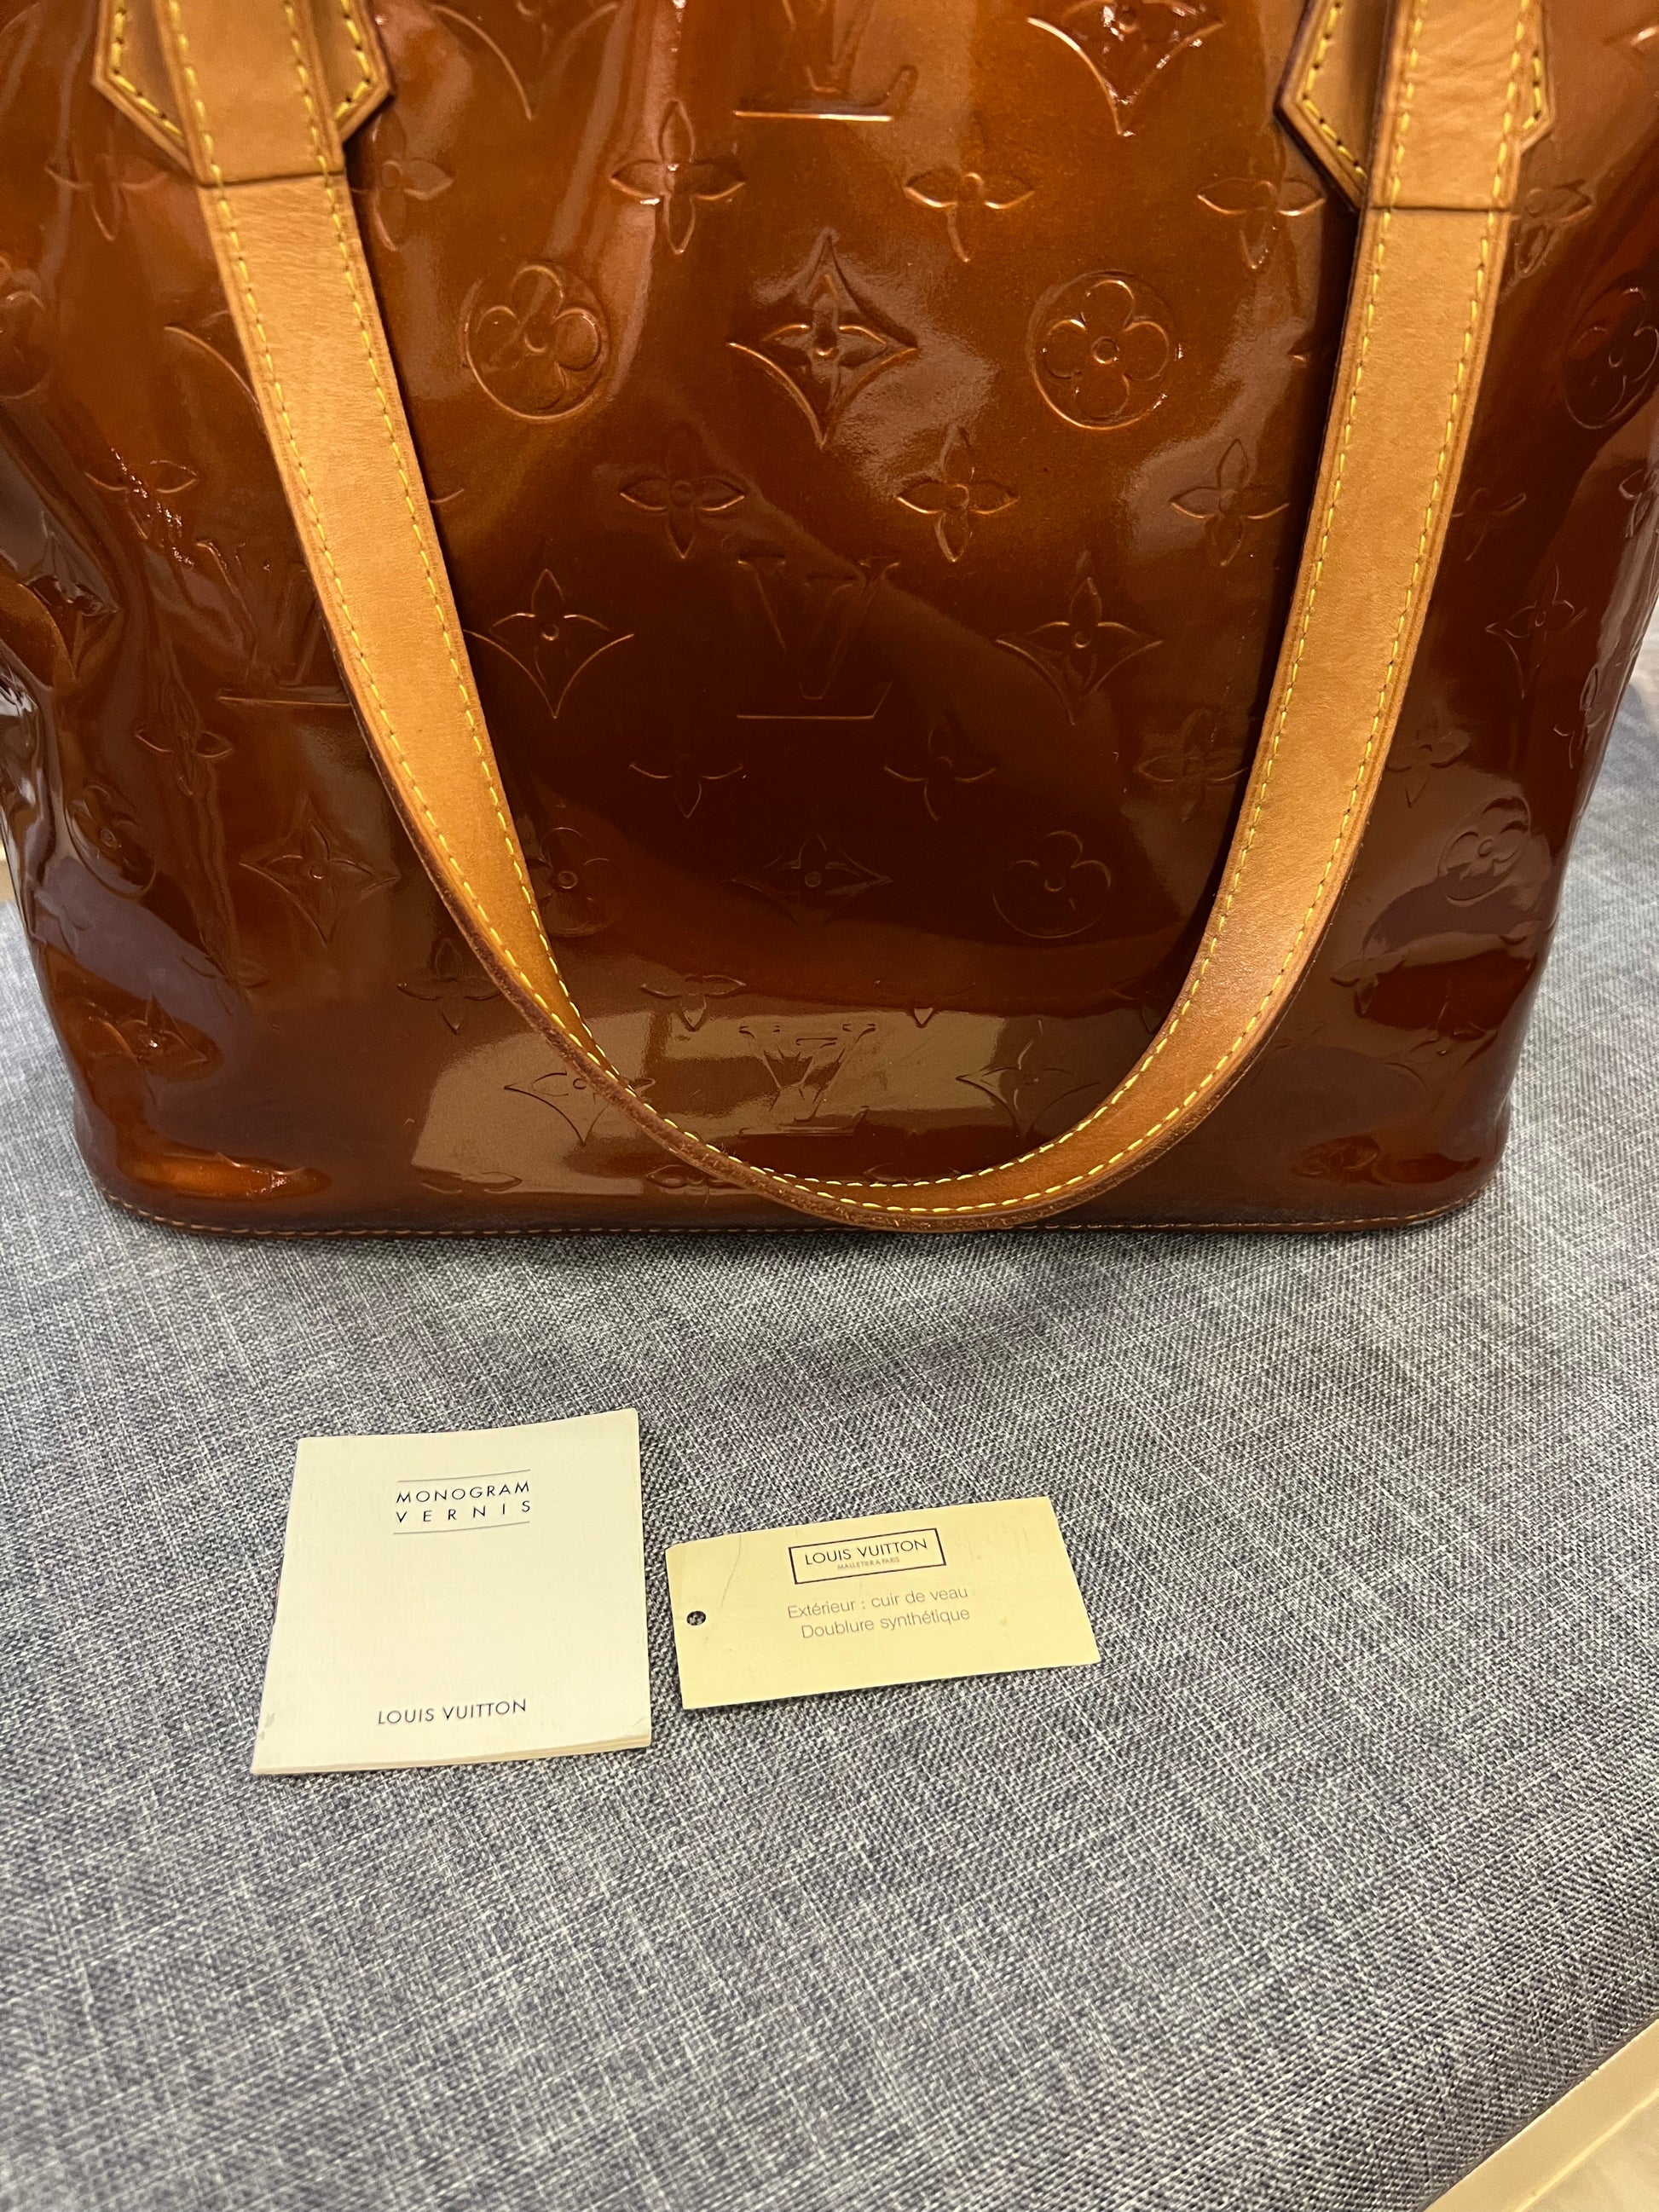 Louis Vuitton Houston Monogram Vernis Patent Leather Tote on SALE